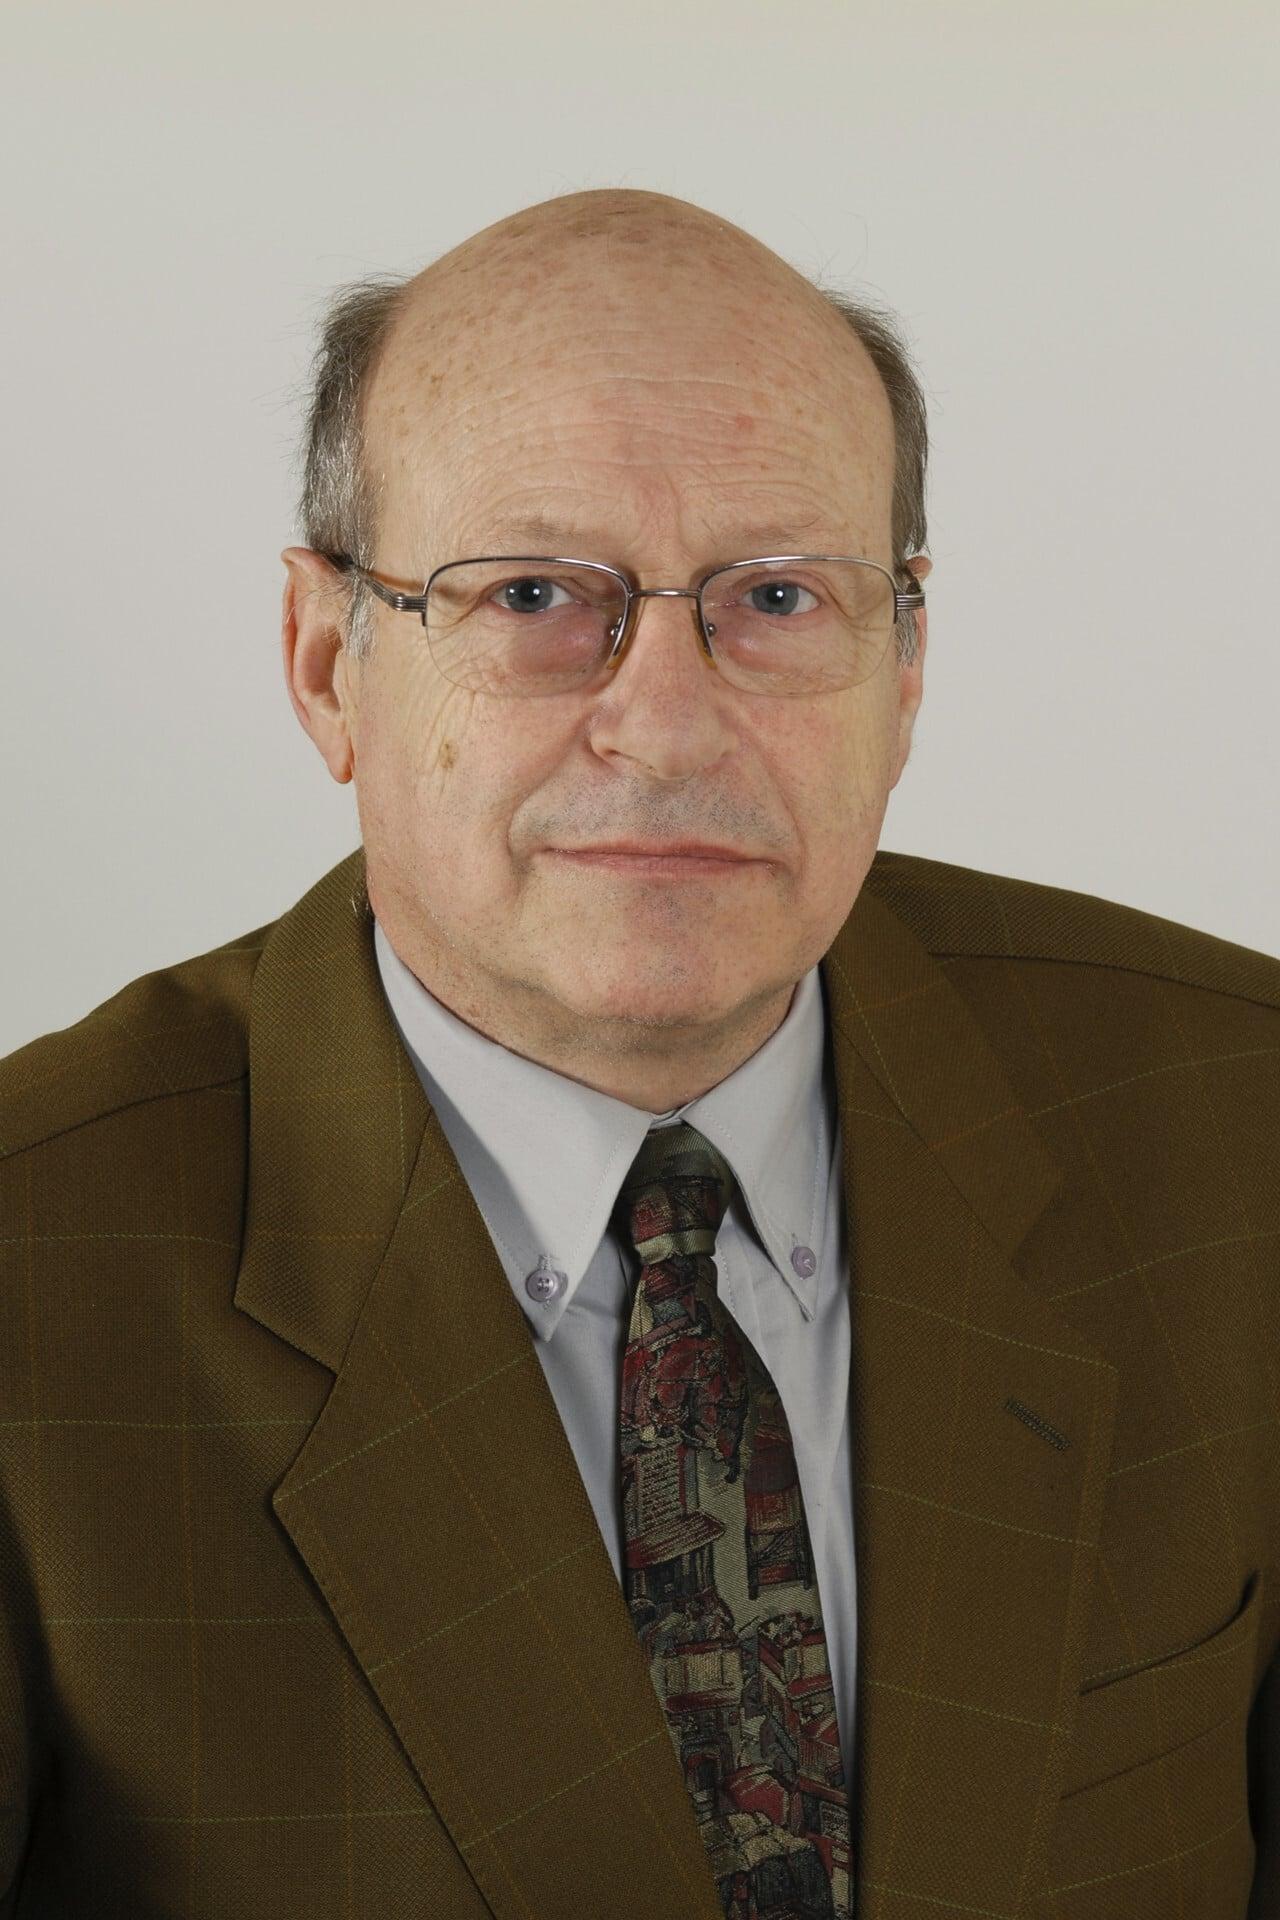 Michel Dubois | Member of Parliament 2